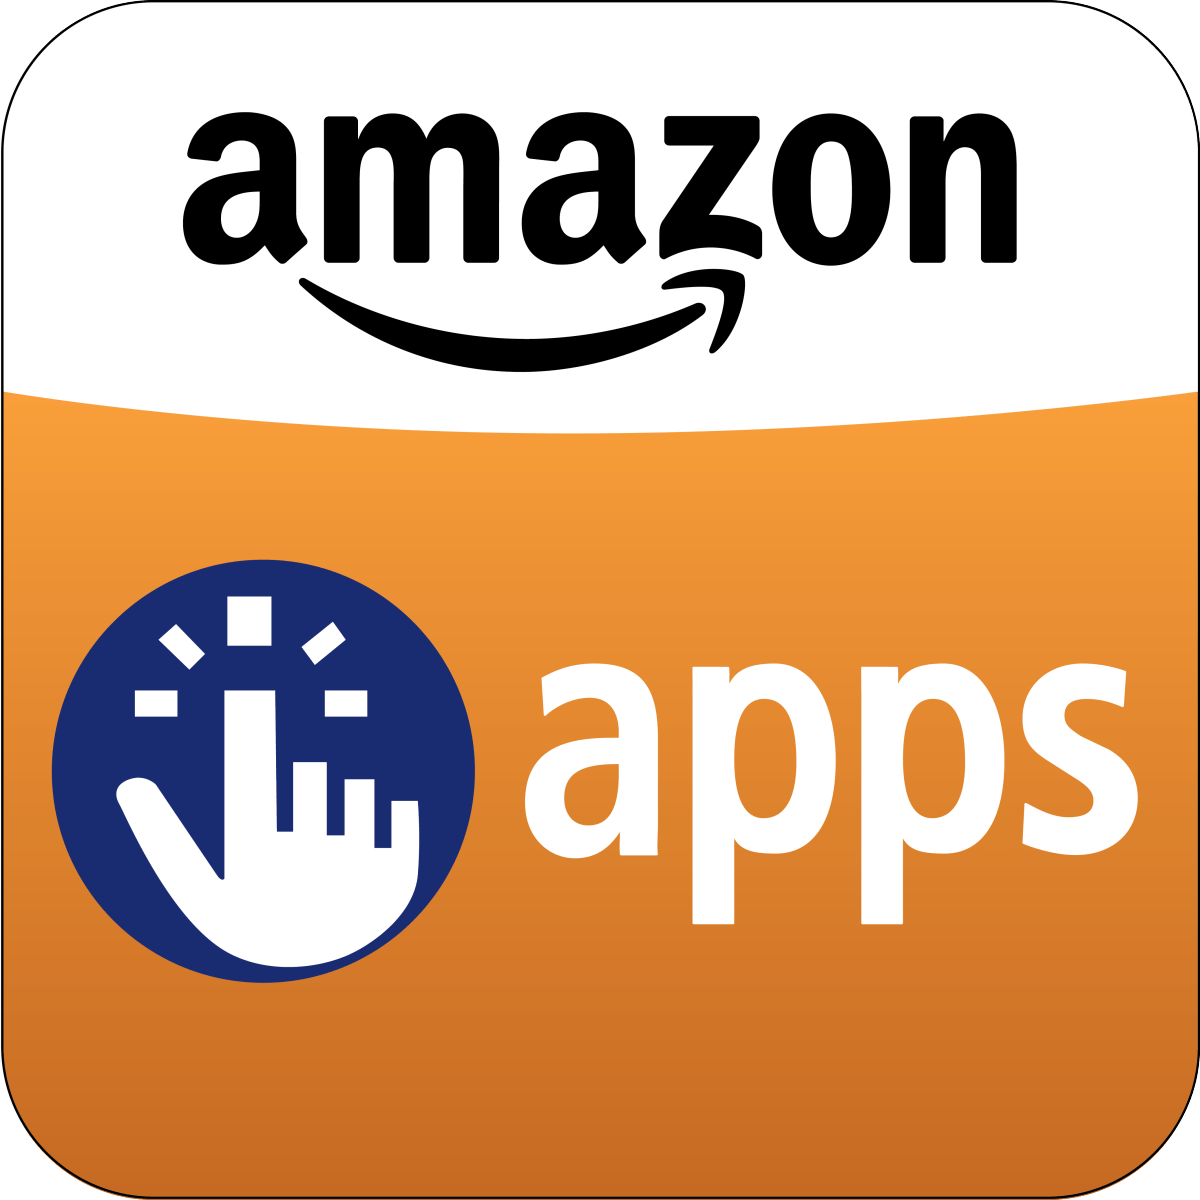 Amazon App Logo - Amazon Free App of the Day No Longer Available